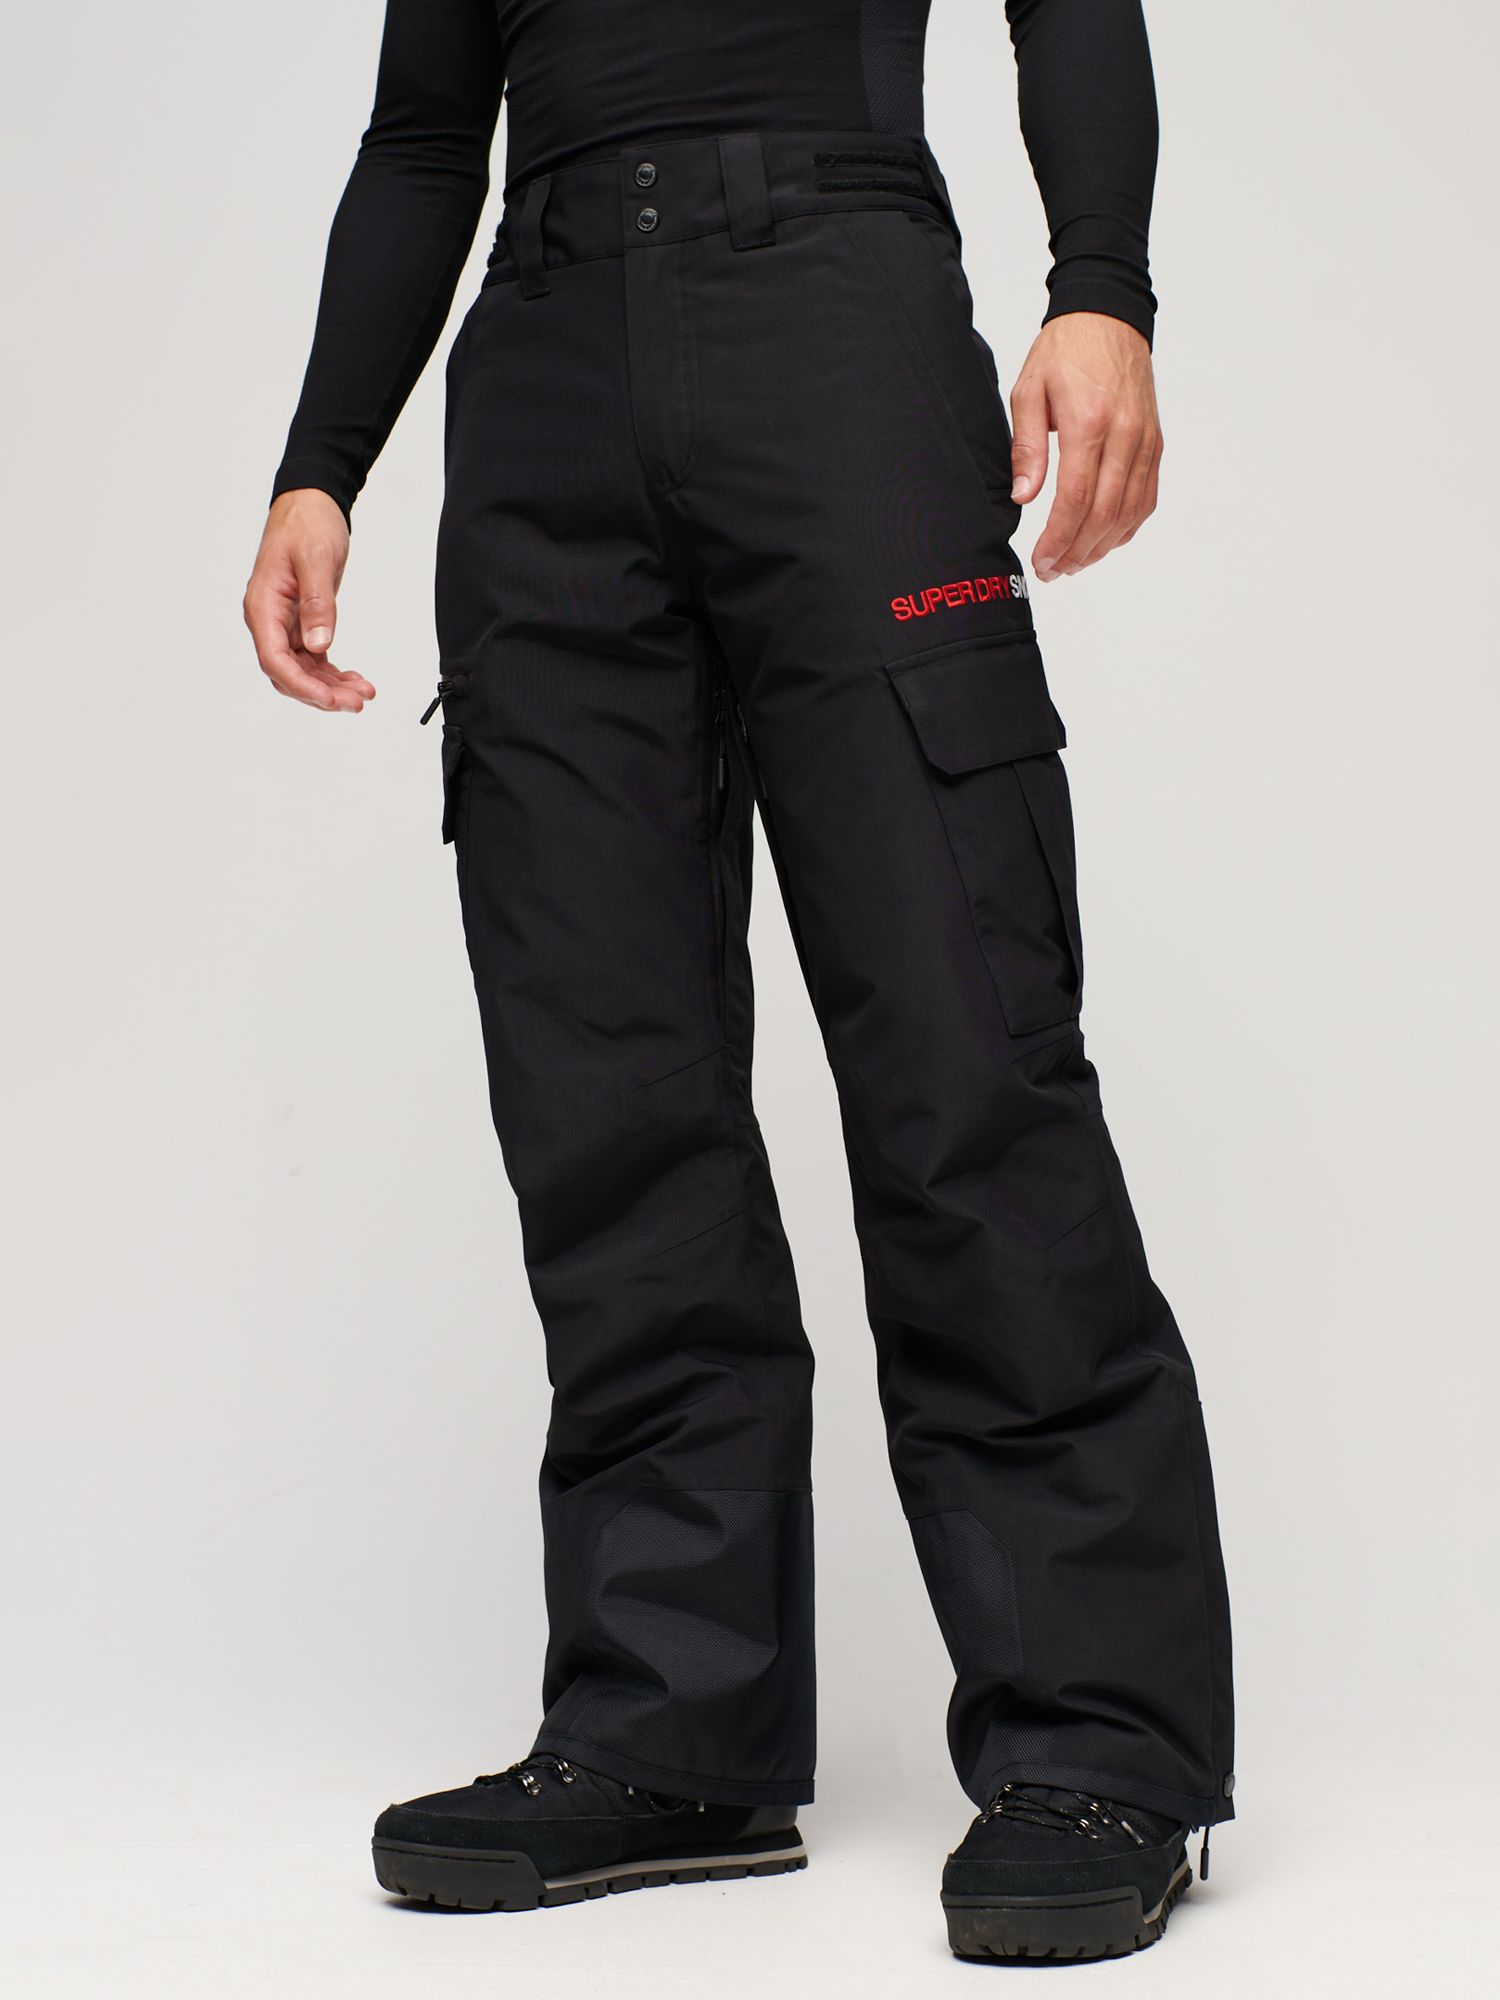 Women's Ultimate Rescue Ski Trousers in Black